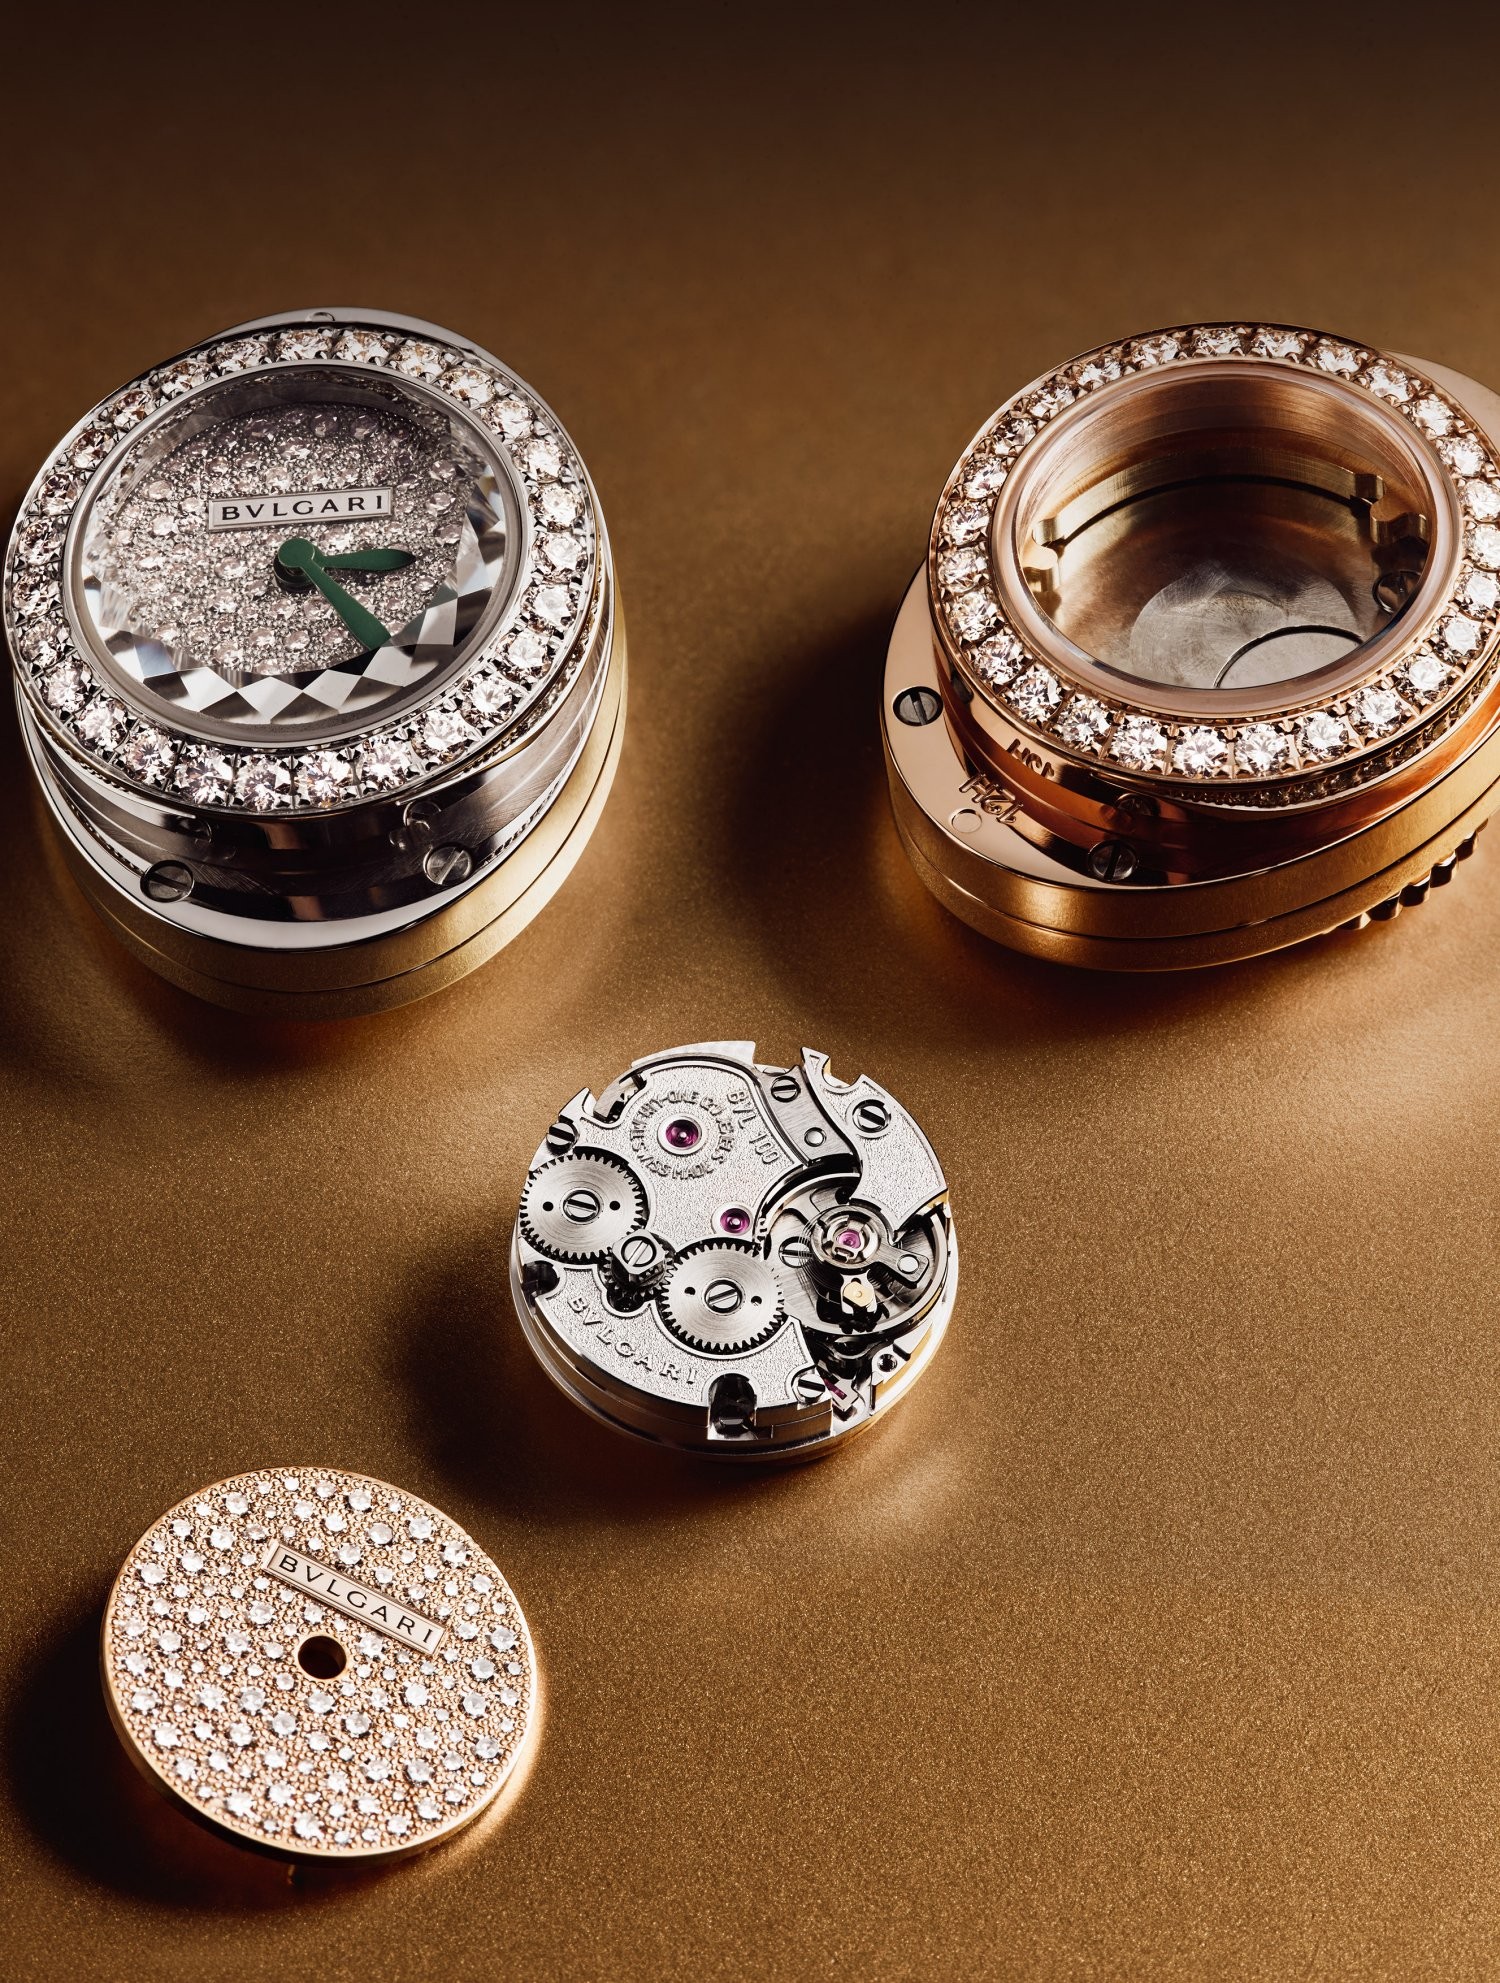 Piccolissimo微型機芯是目前世界上最小的機械機芯之一，集工藝、裝飾和瑞士製錶技術於一身。